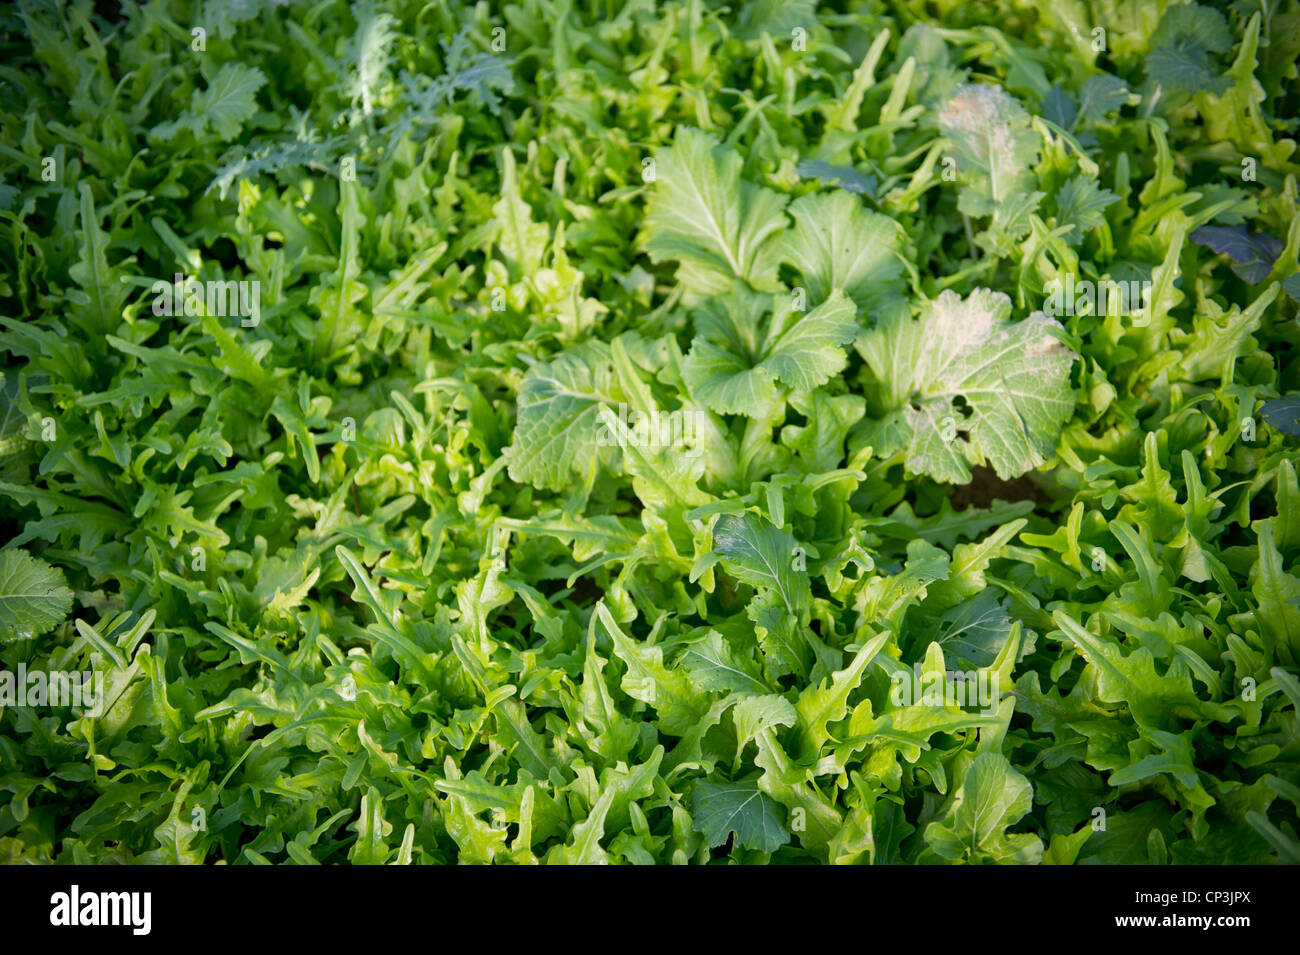 Leafy green crop Stock Photo